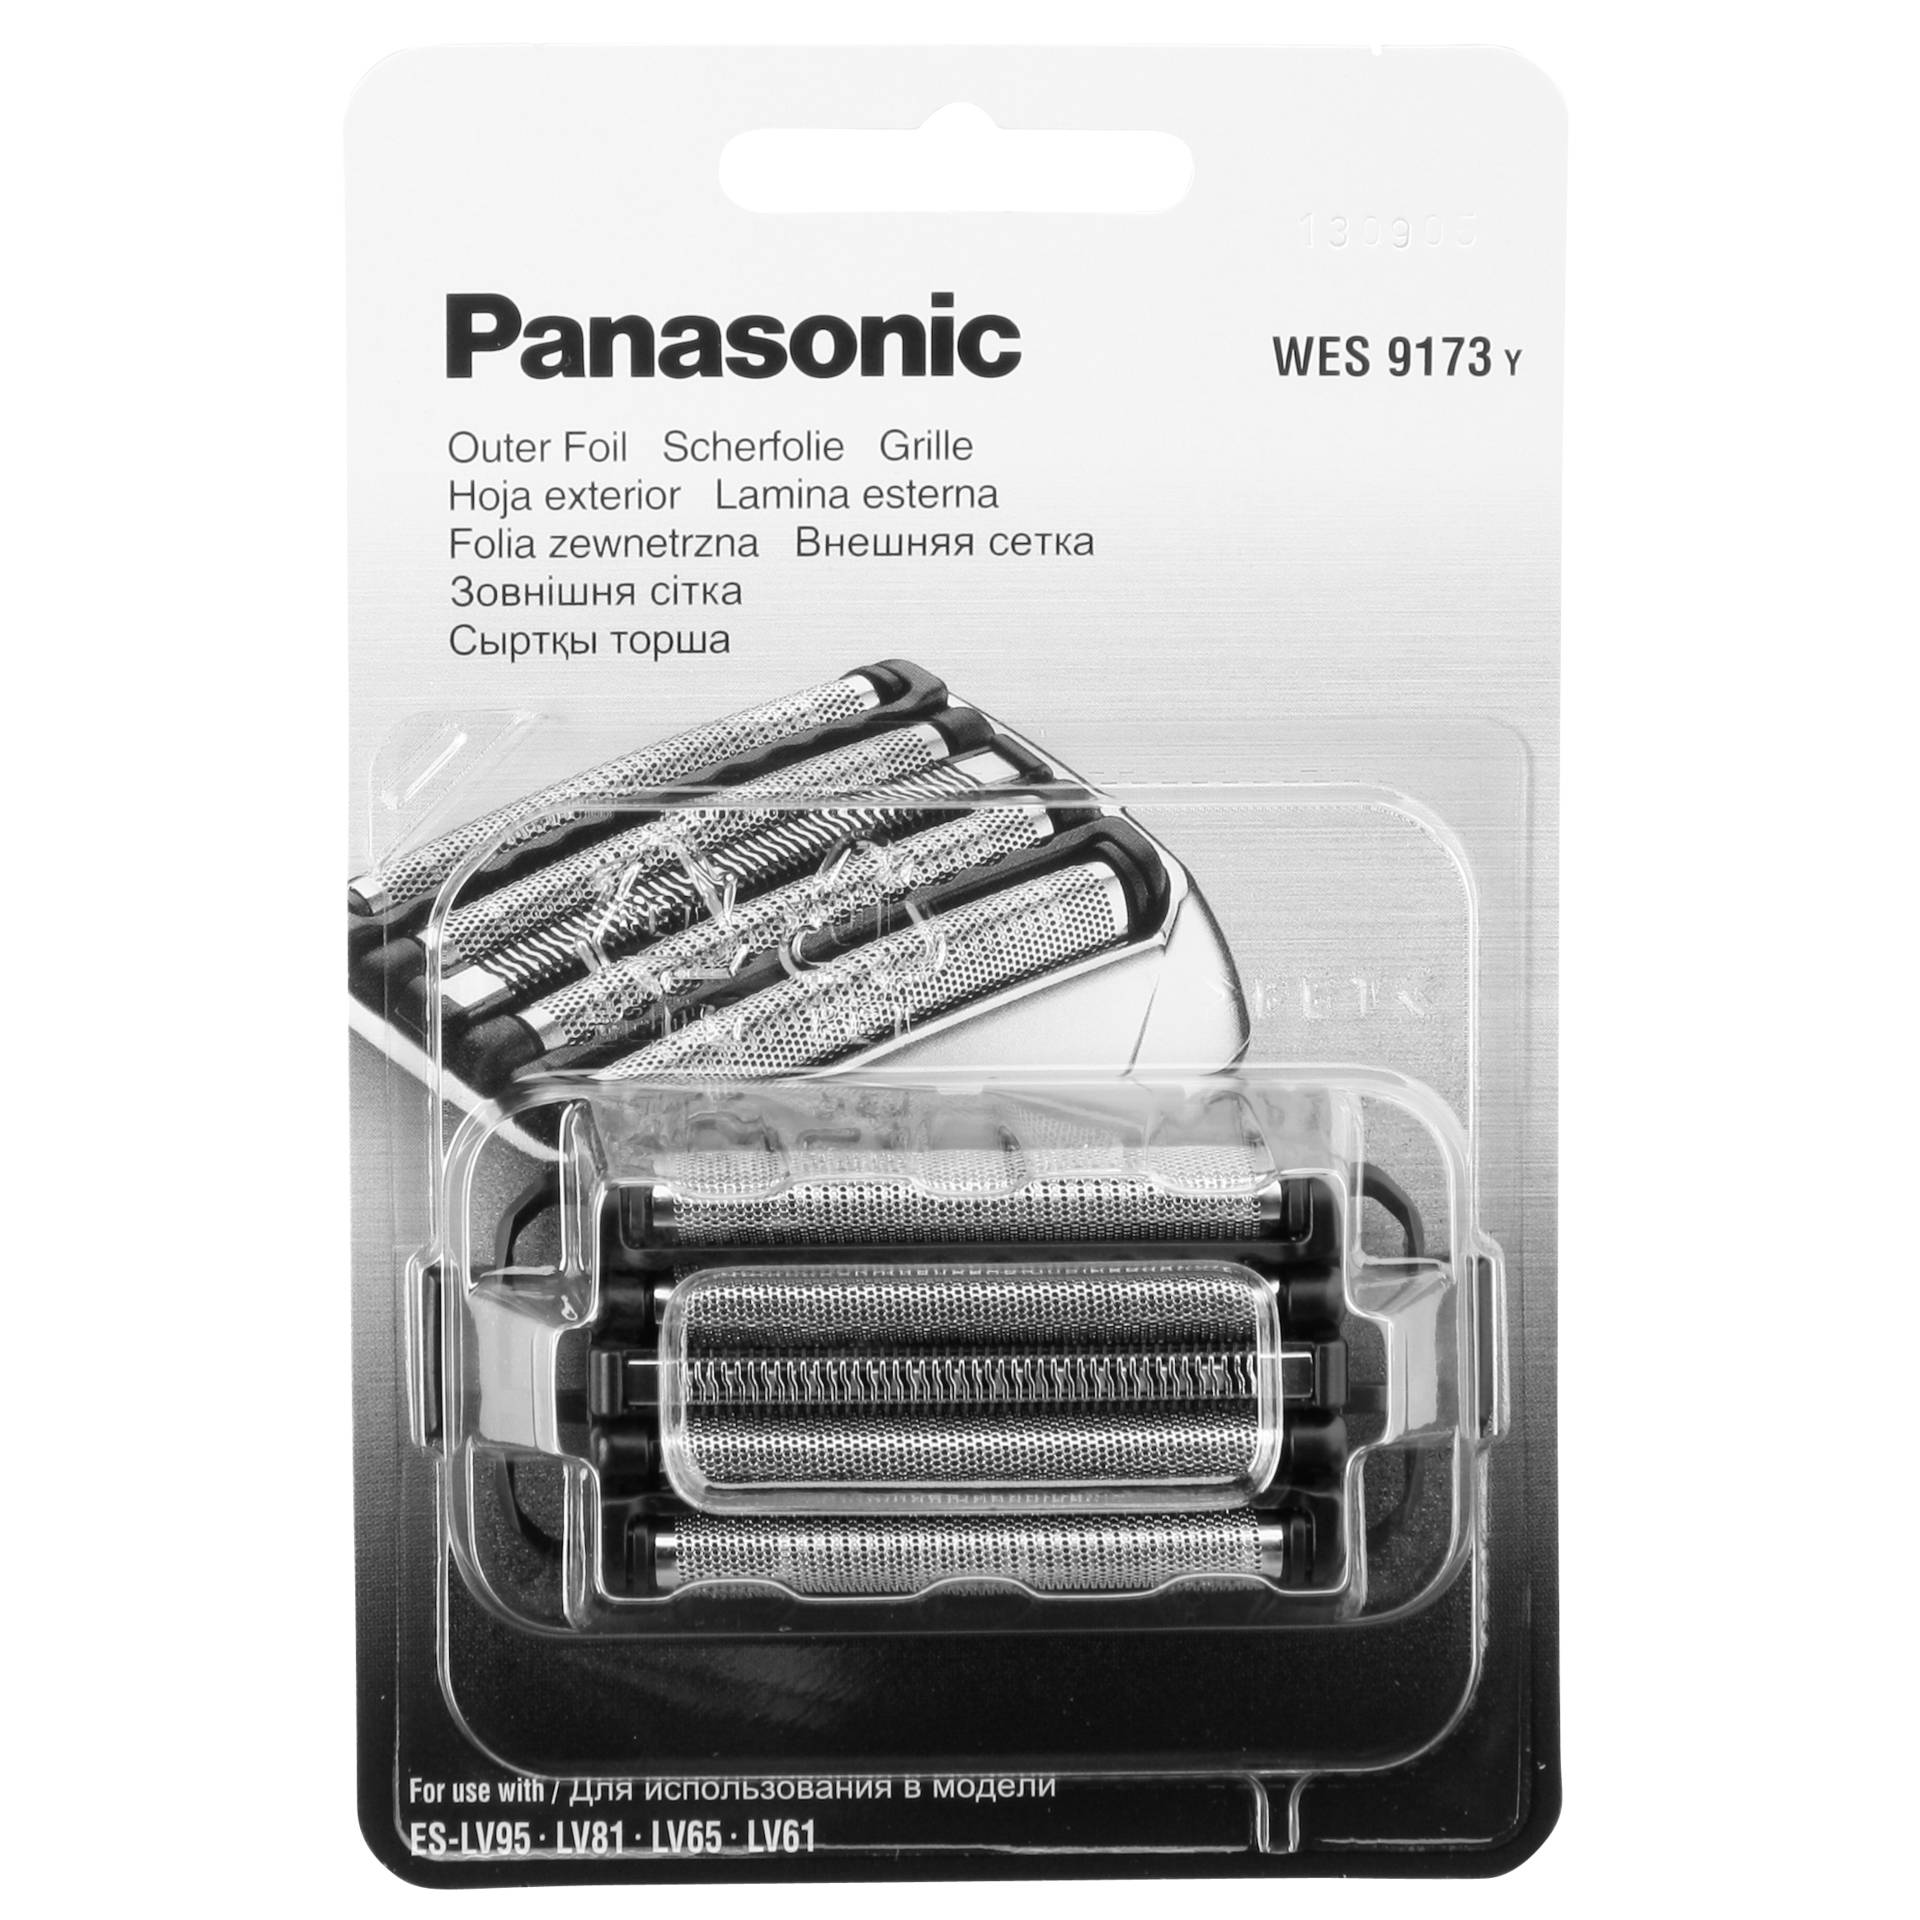 Panasonic WES 9173 Y1361 - Panasonic - Autoscatto Store